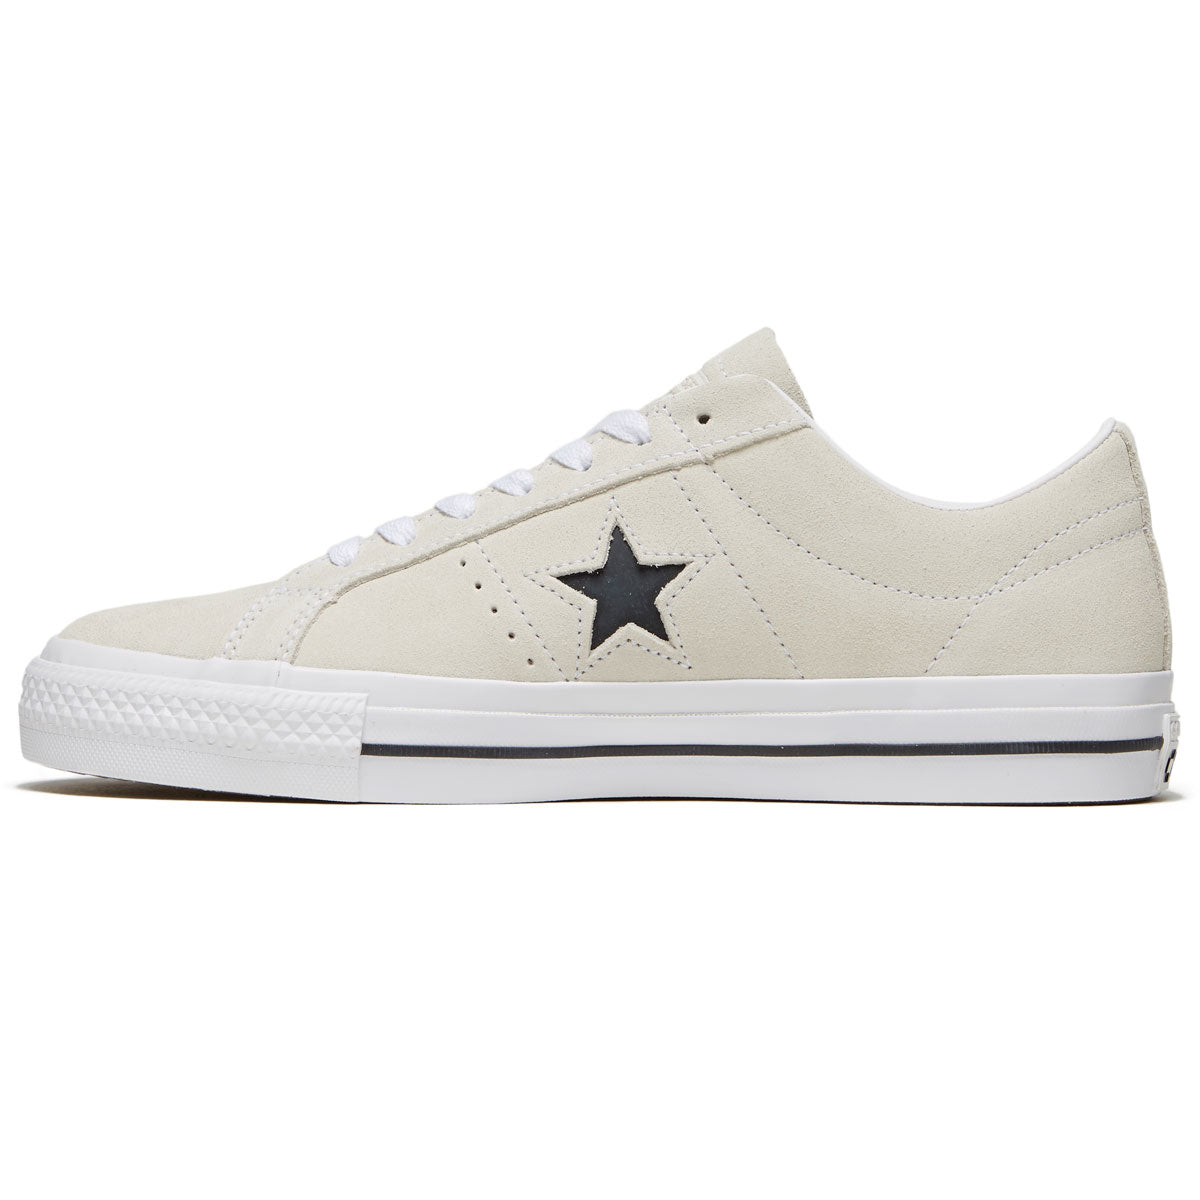 Converse One Star Pro Suede Shoes - Egret/White/Black – CCS